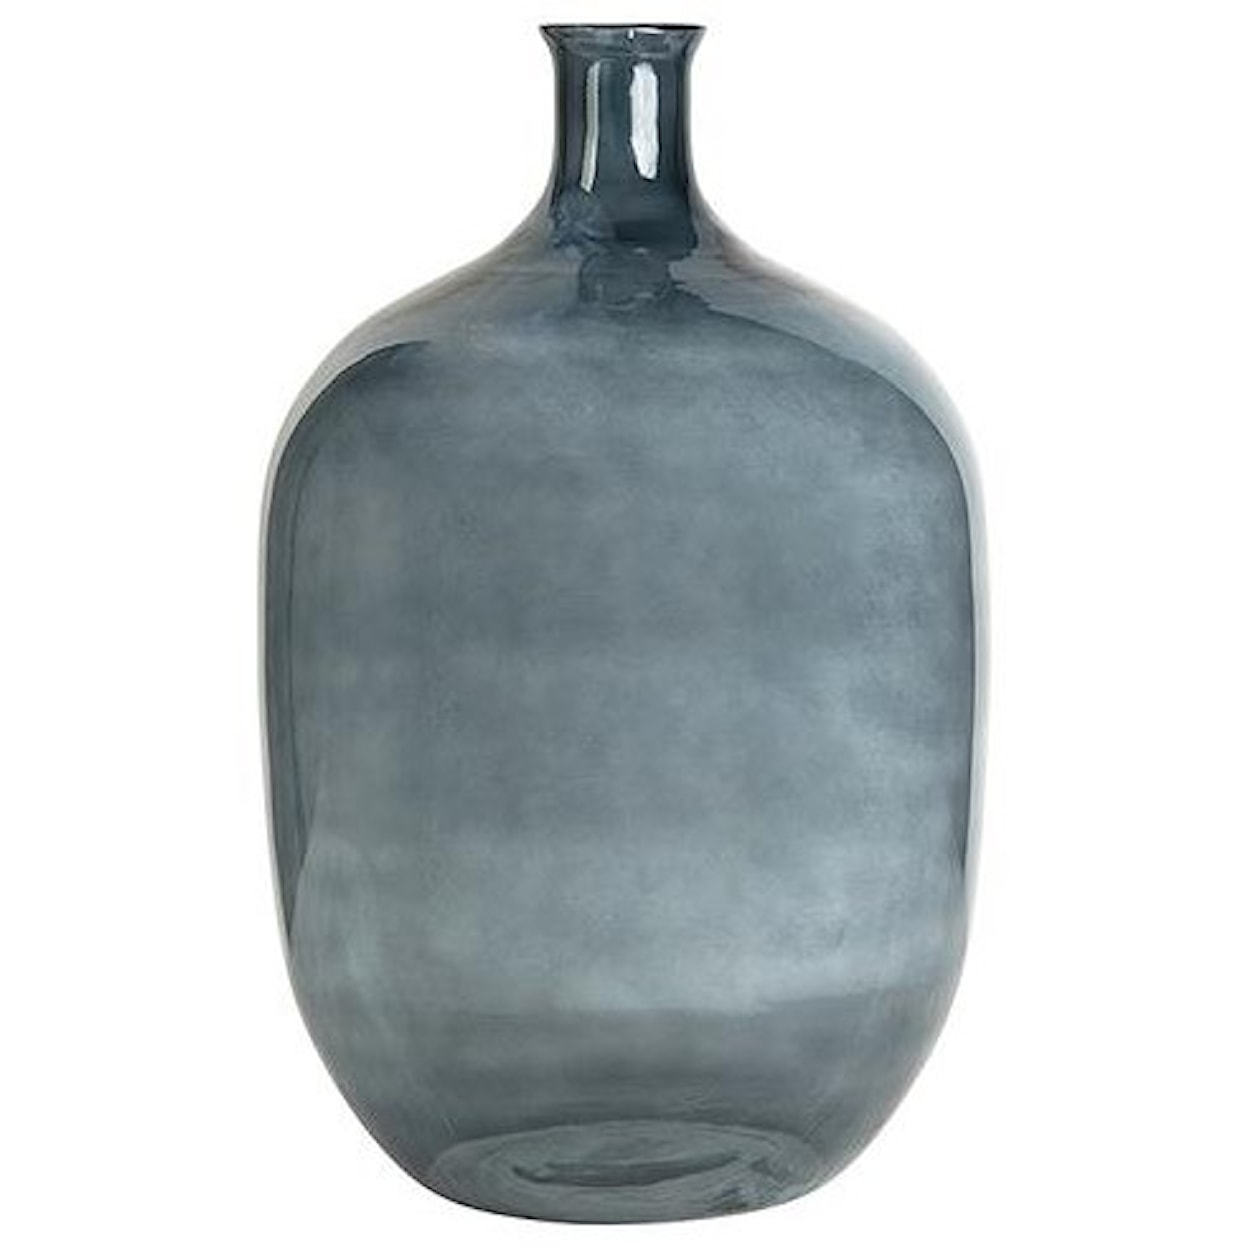 Dovetail Furniture Accessories Oslo Vase